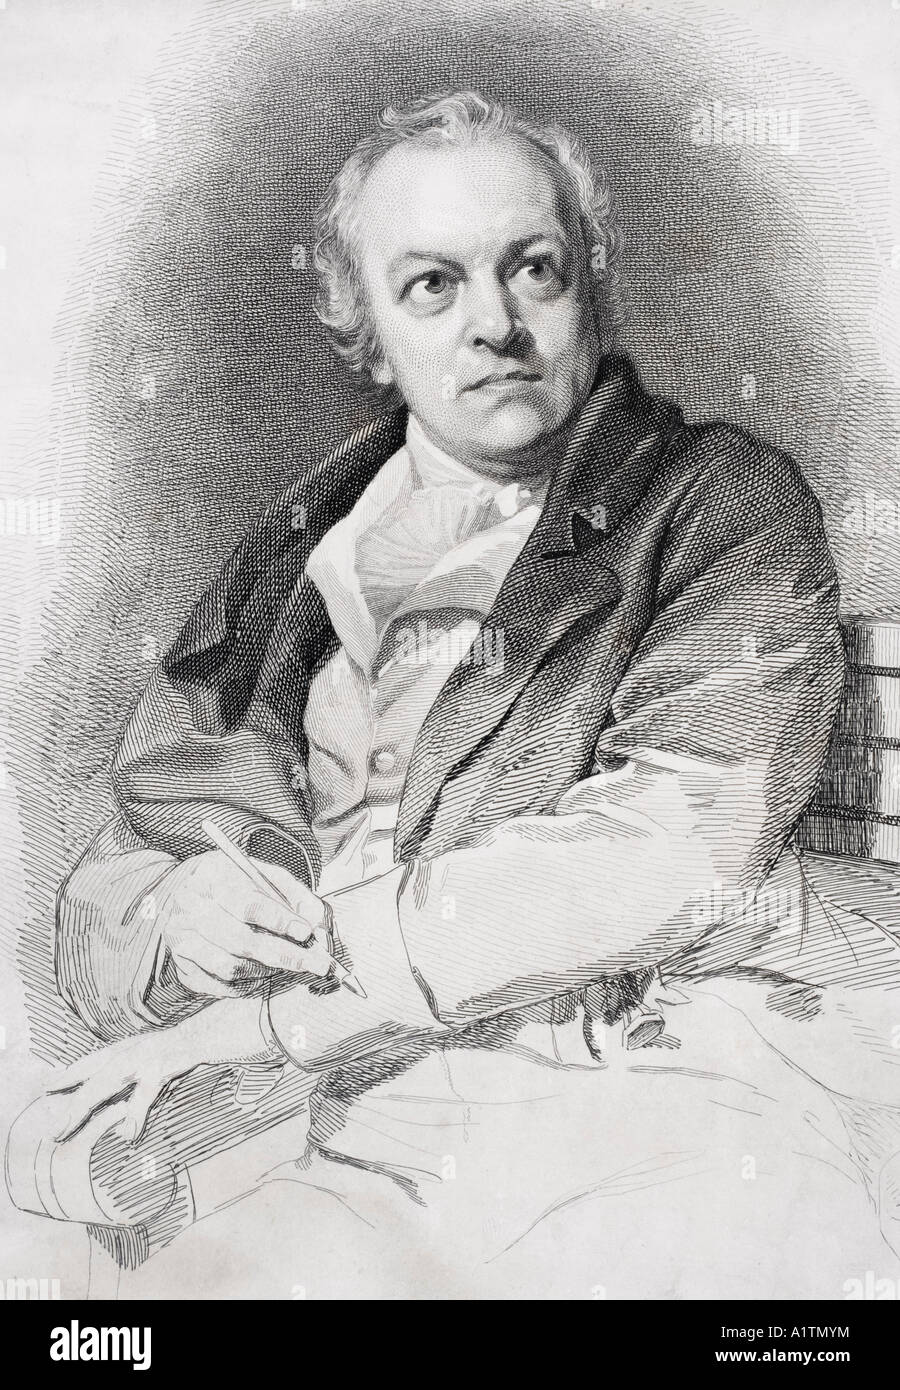 William Blake, 1757 - 1857. English poet, painter and printmaker. Stock Photo